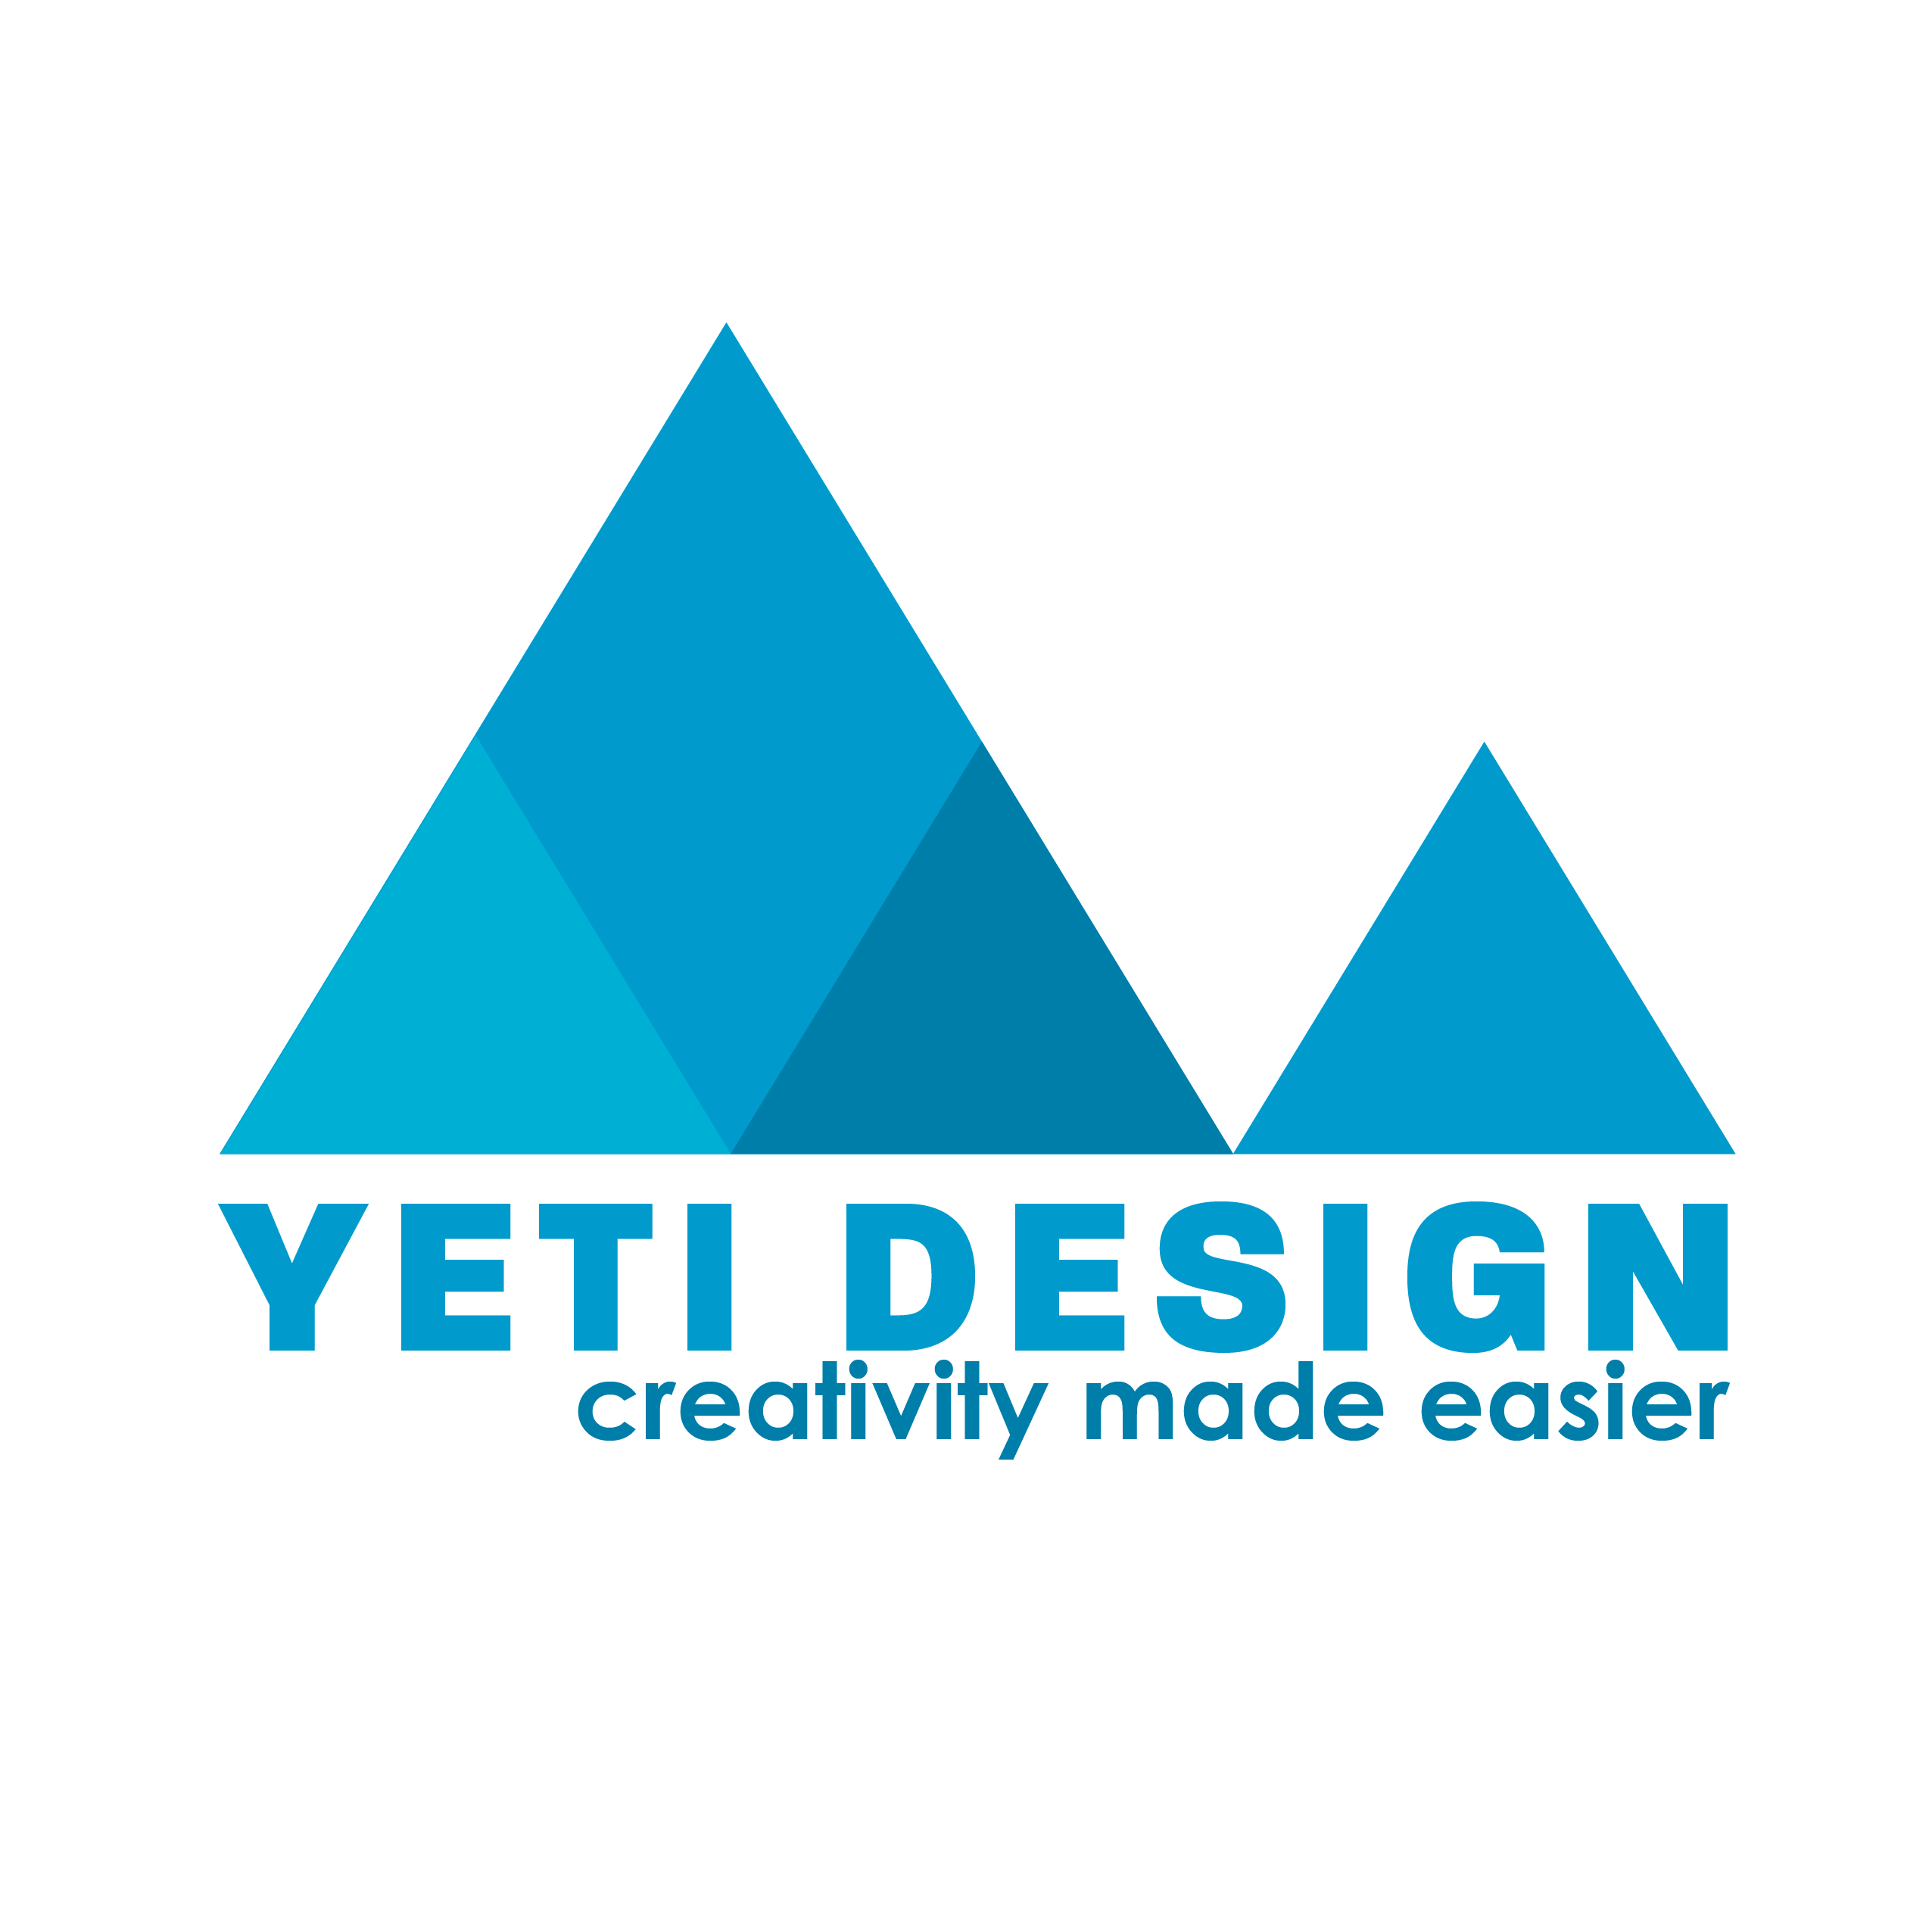 Yeti Design – Creativity made easier